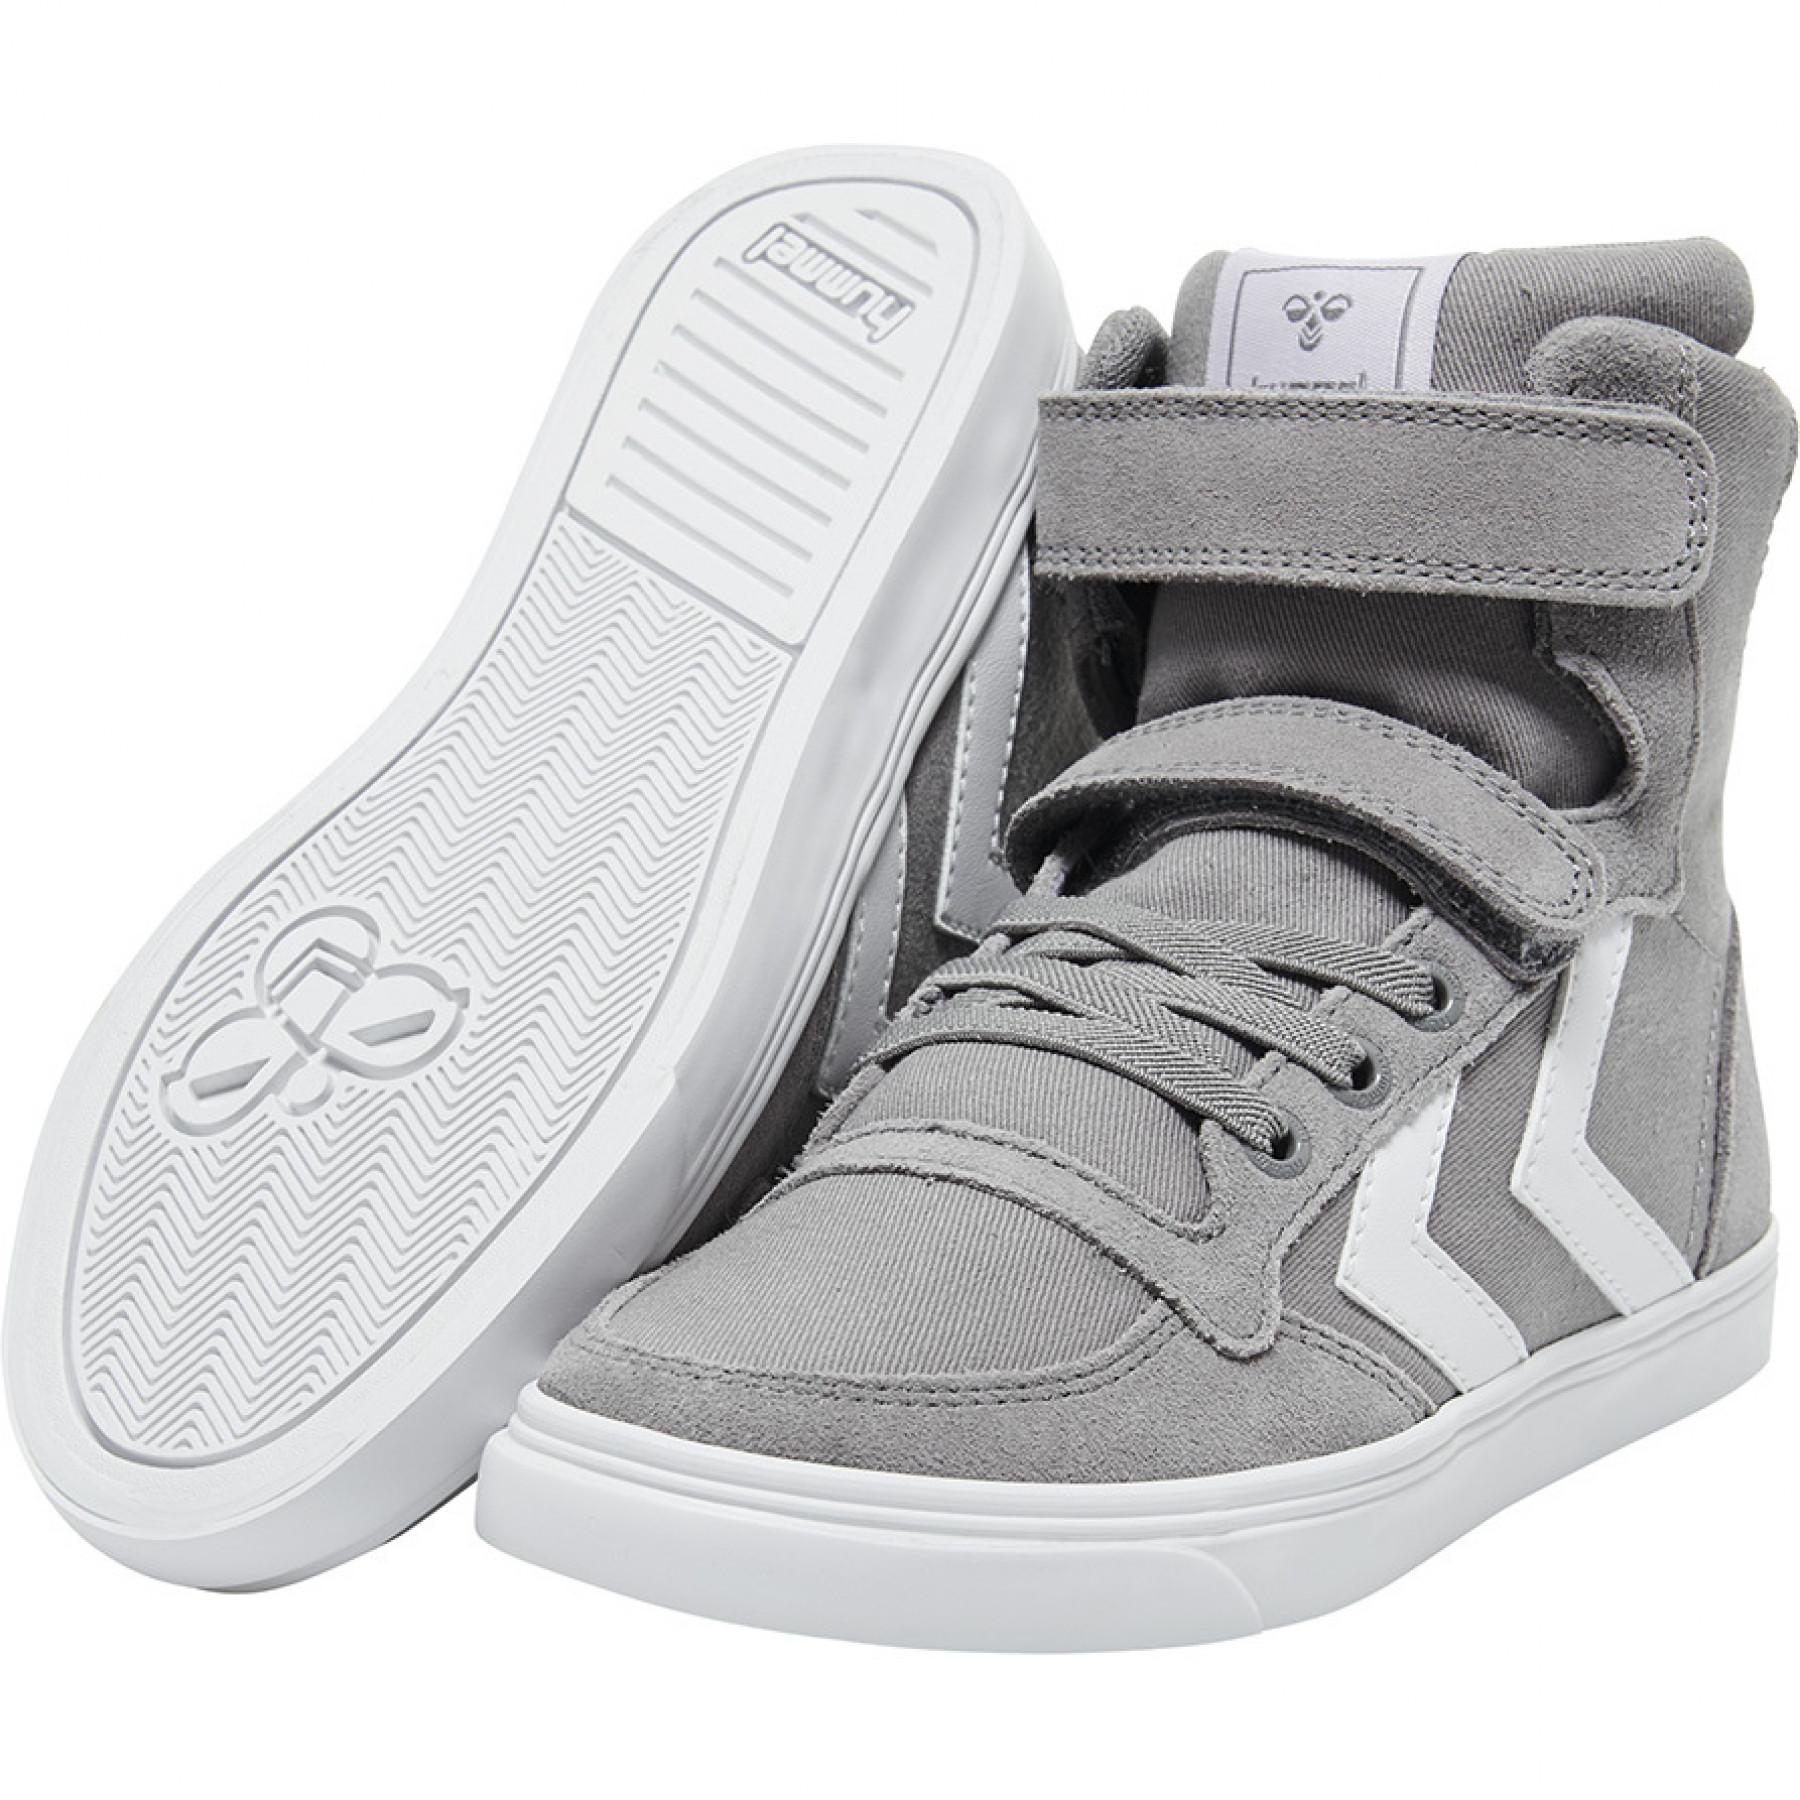 Zapatillas Hummel Slimmer stadil - adidas - Sneakers de hombre - Lifestyle